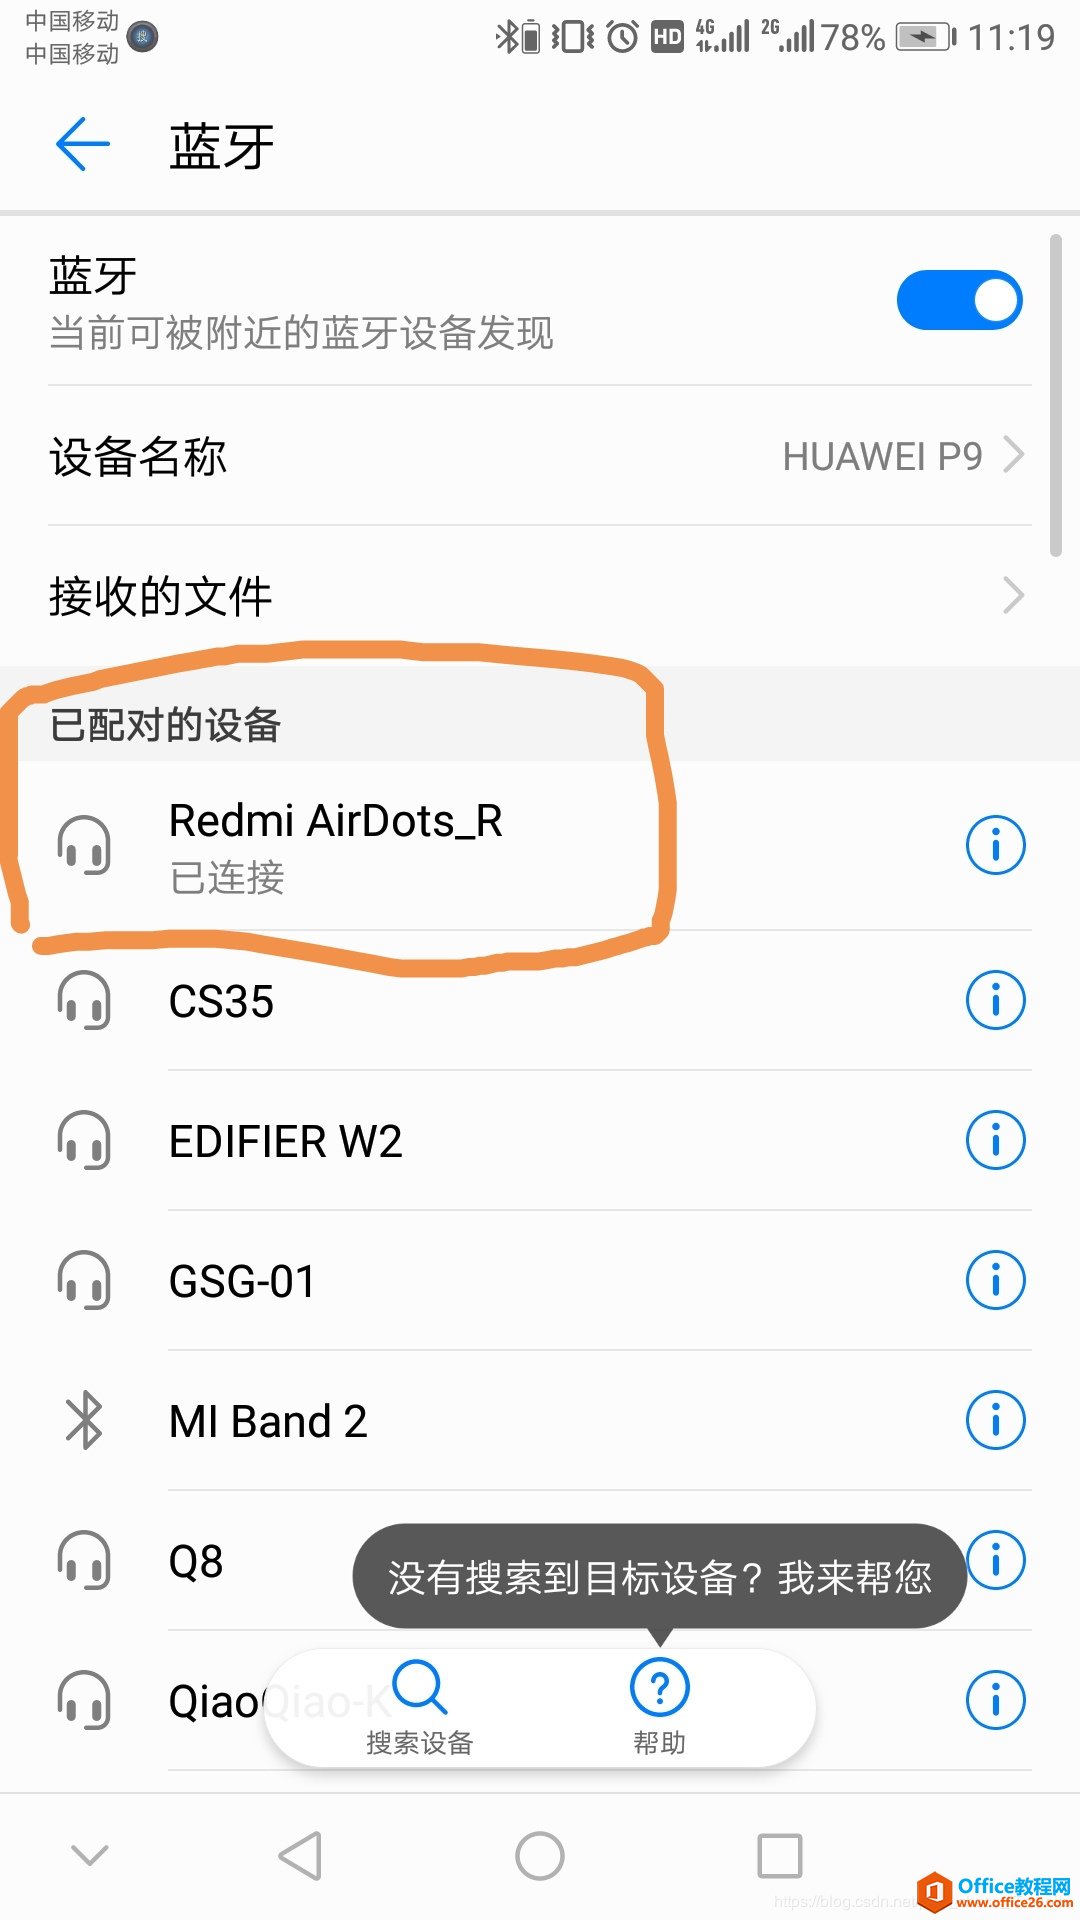 <b>红米耳机Redmi AirDots 左耳没有声音，一直白灯闪烁；如何同时连接双耳？？</b>